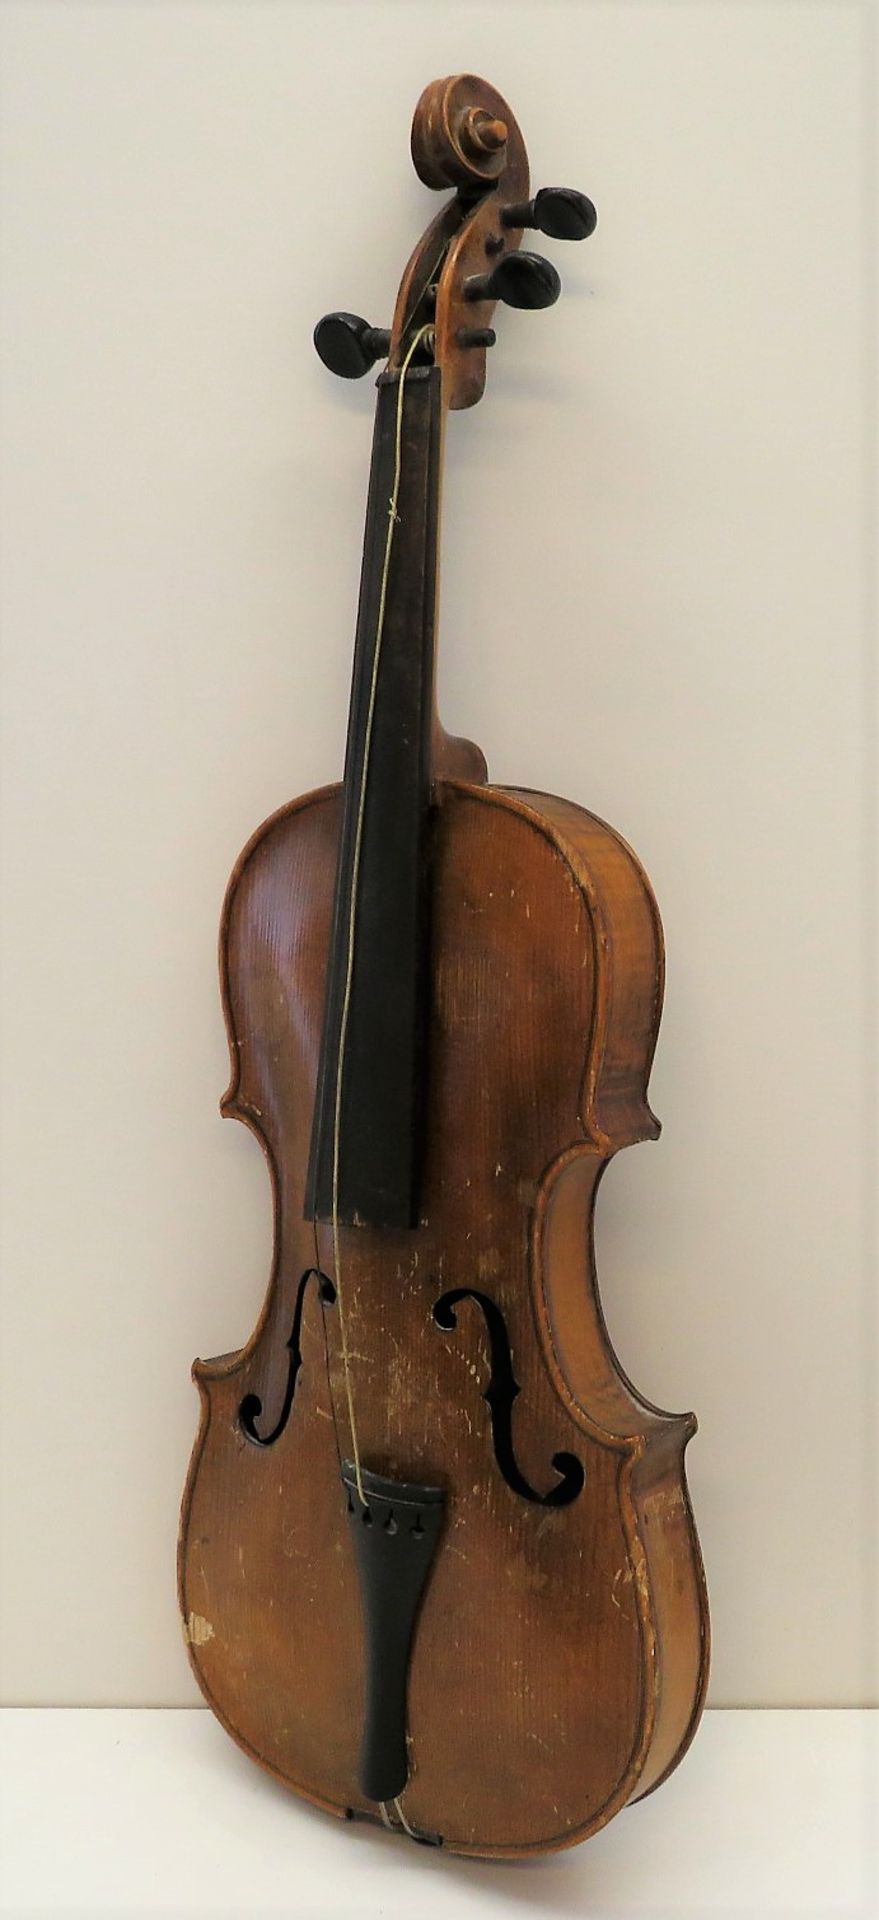 Alte Geige, Etikett "Christian Donat Hopff Klingenthal 1736", Gebrauchsspuren, 59 x 19 x 9 cm.